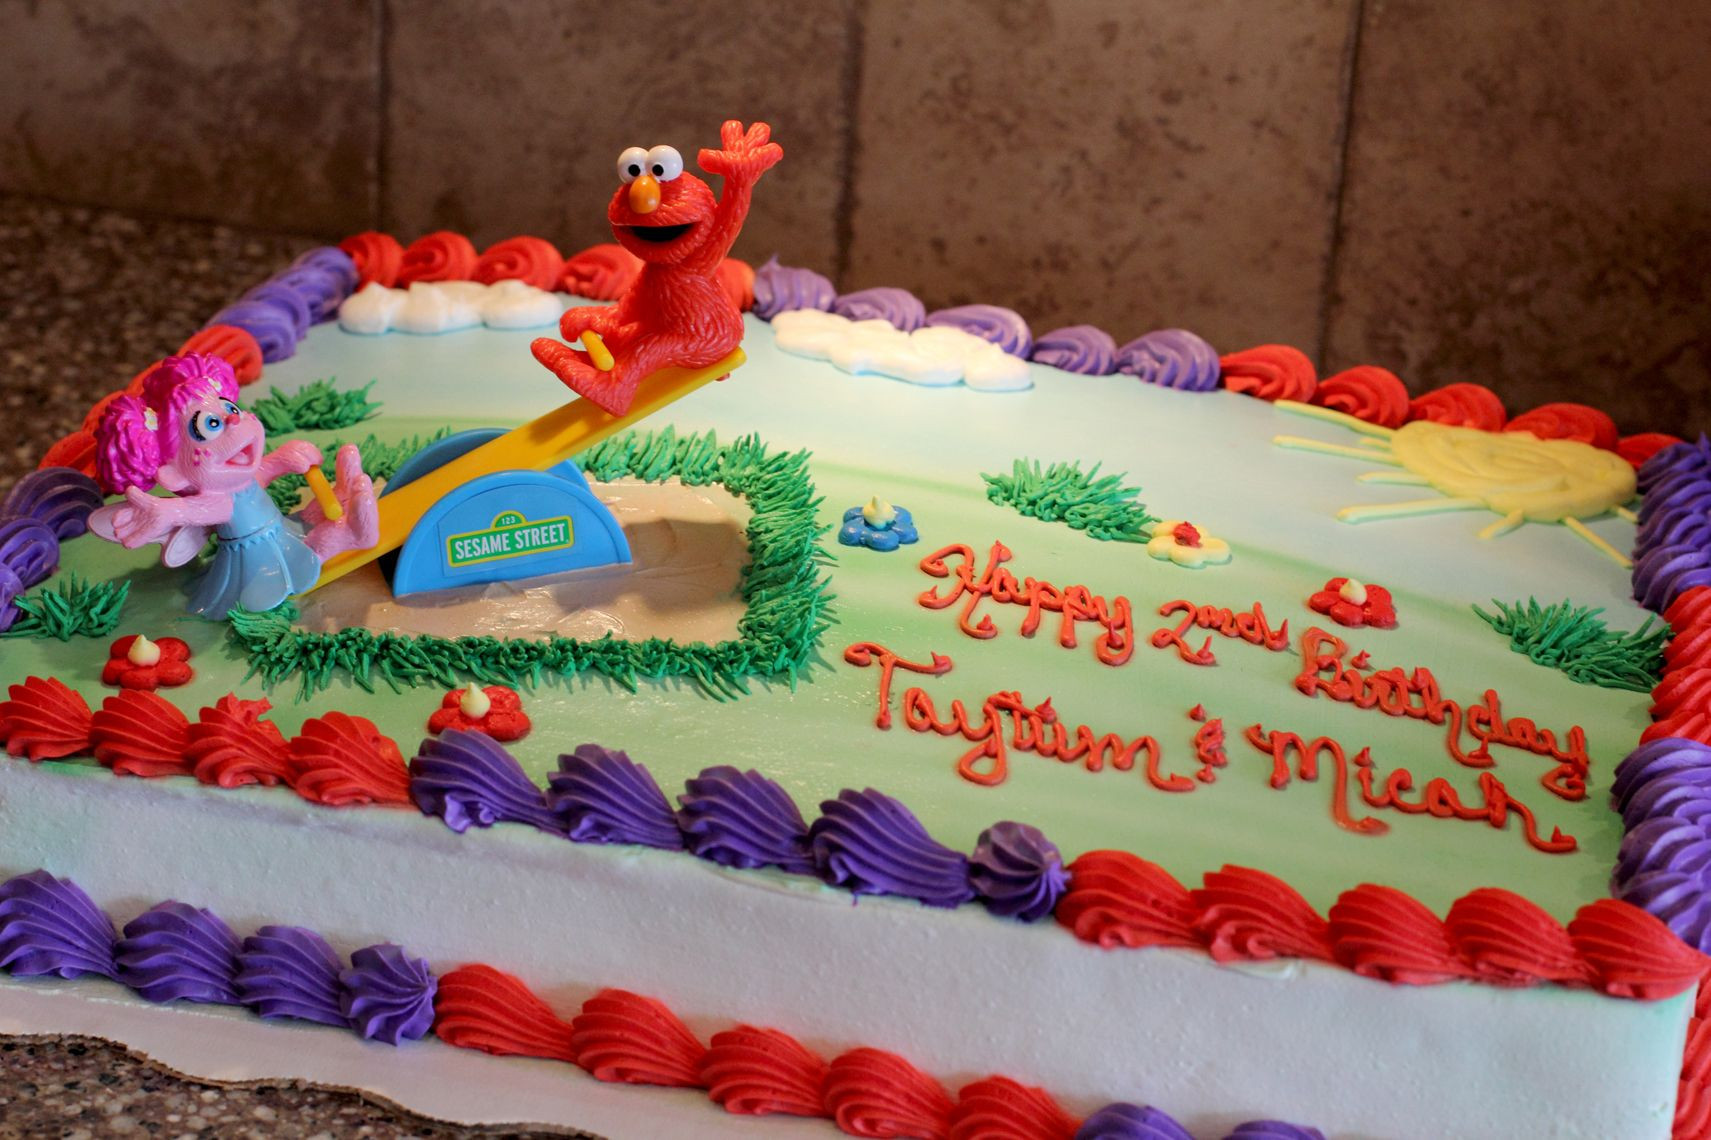 Elmo Birthday Cakes At Walmart
 Elmo & Abby Birthday Party cake from walmart Told them